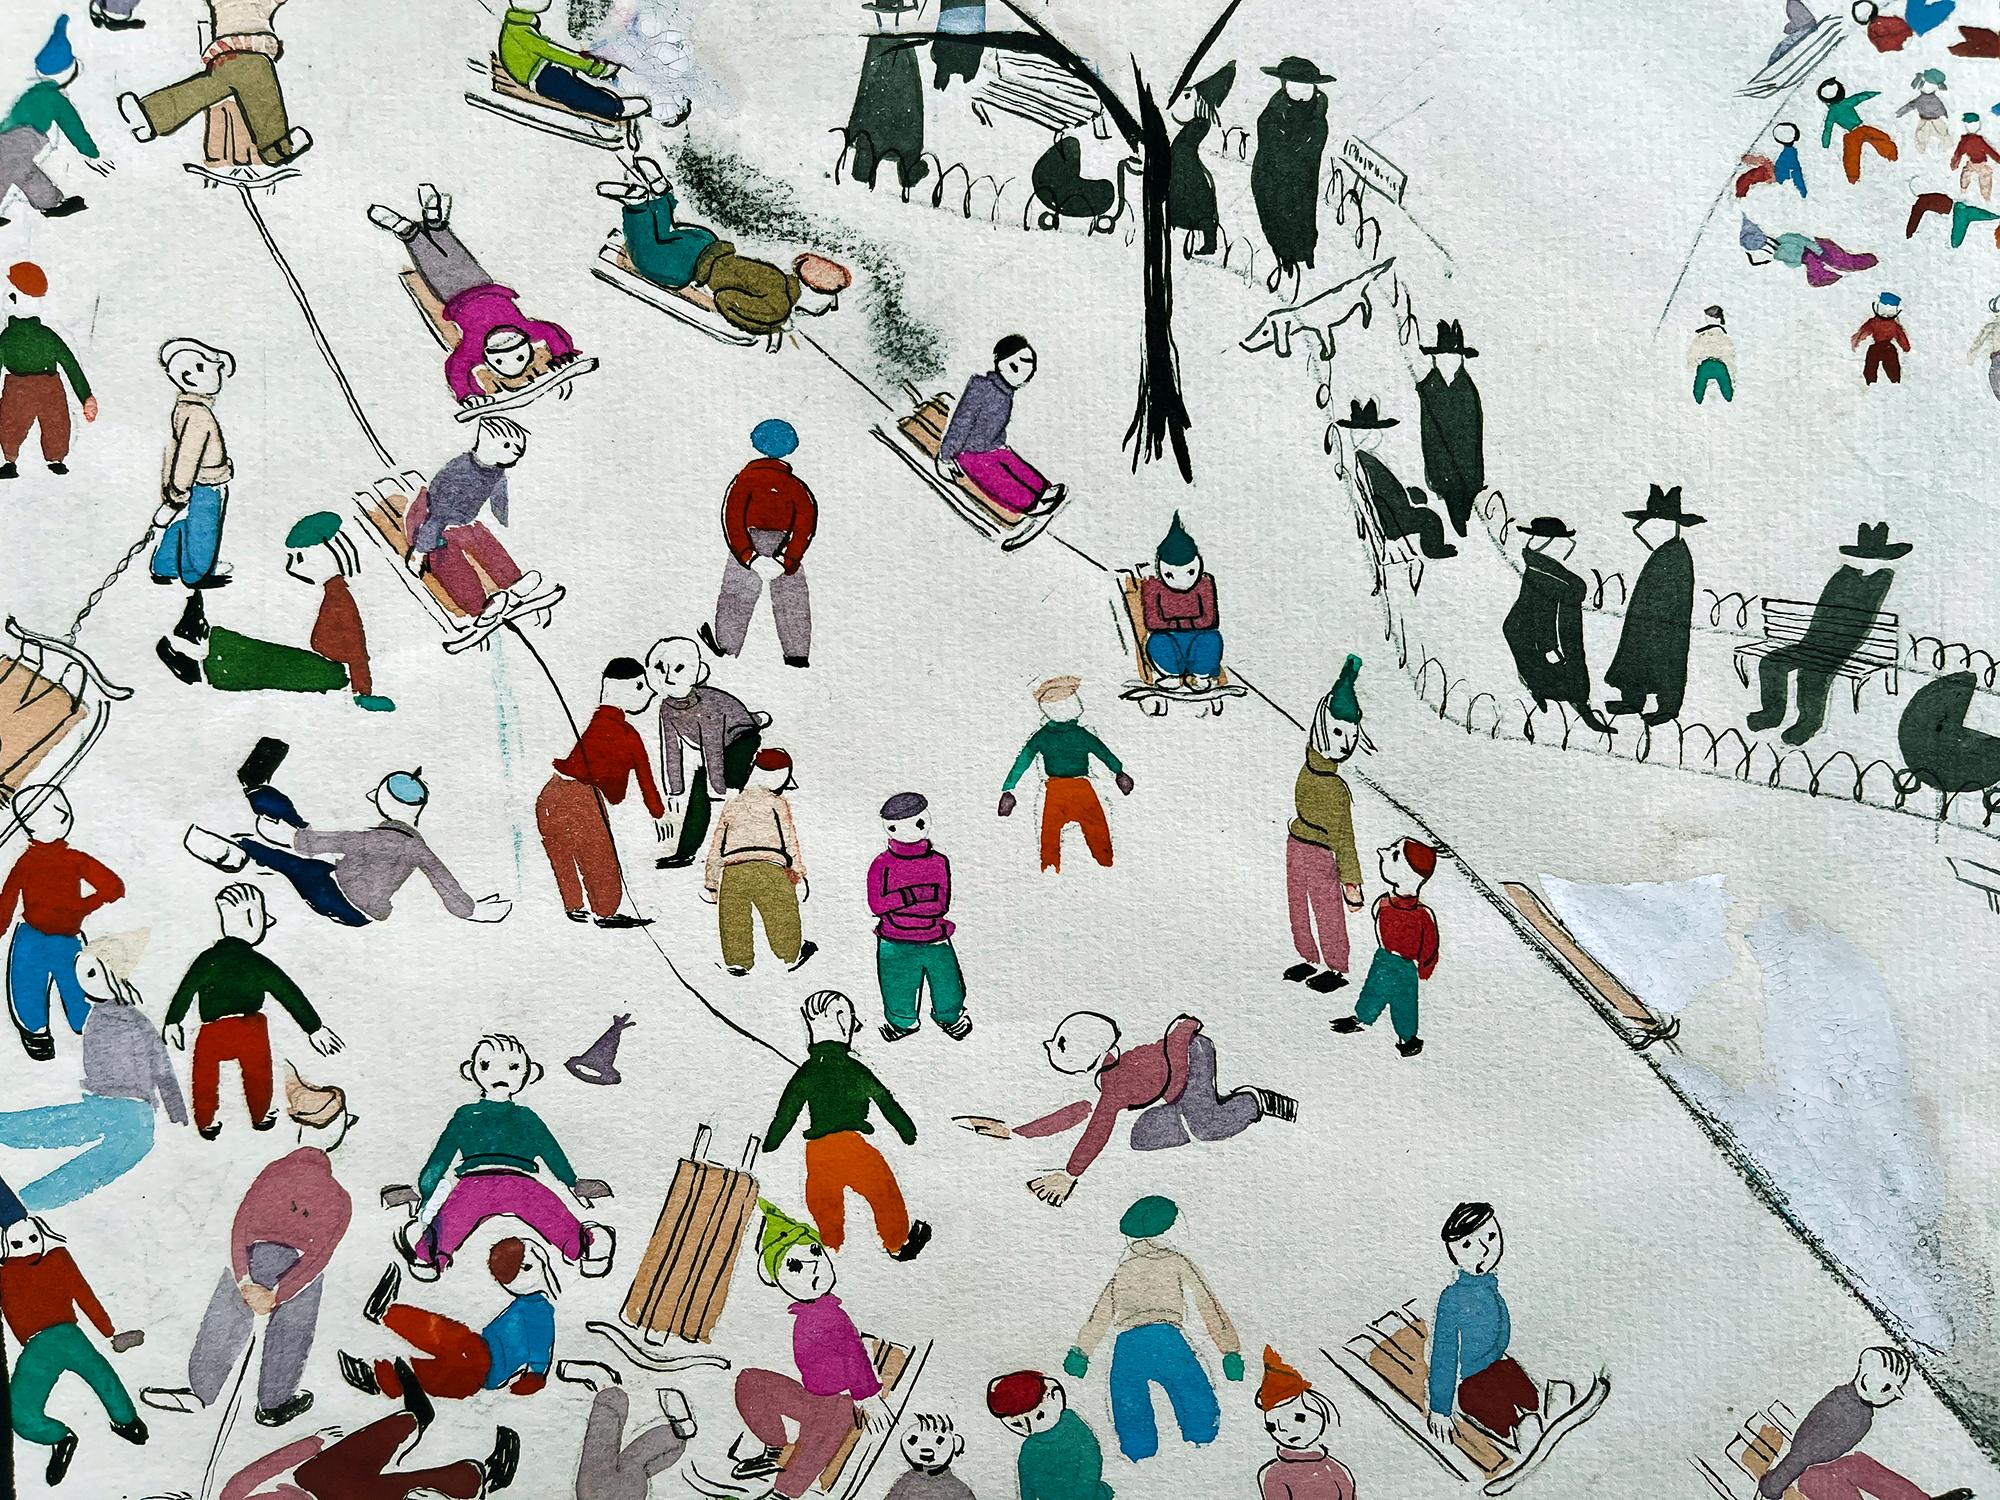 Children Snow Sledding in Central Park  - New Yorker Cover Study - Modern Art by Ilonka Karasz